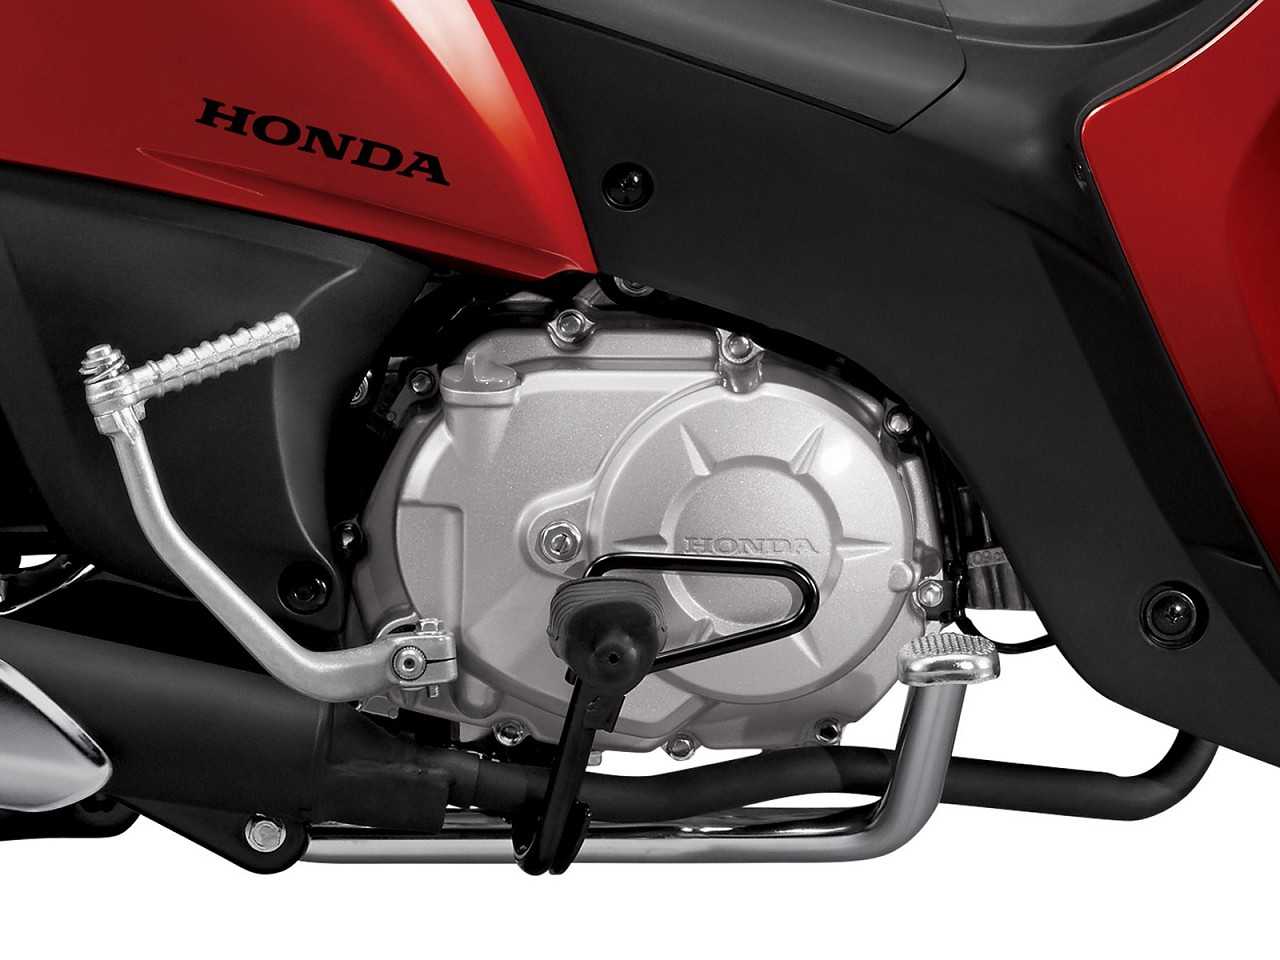 HondaBiz 110i 2016 - motor